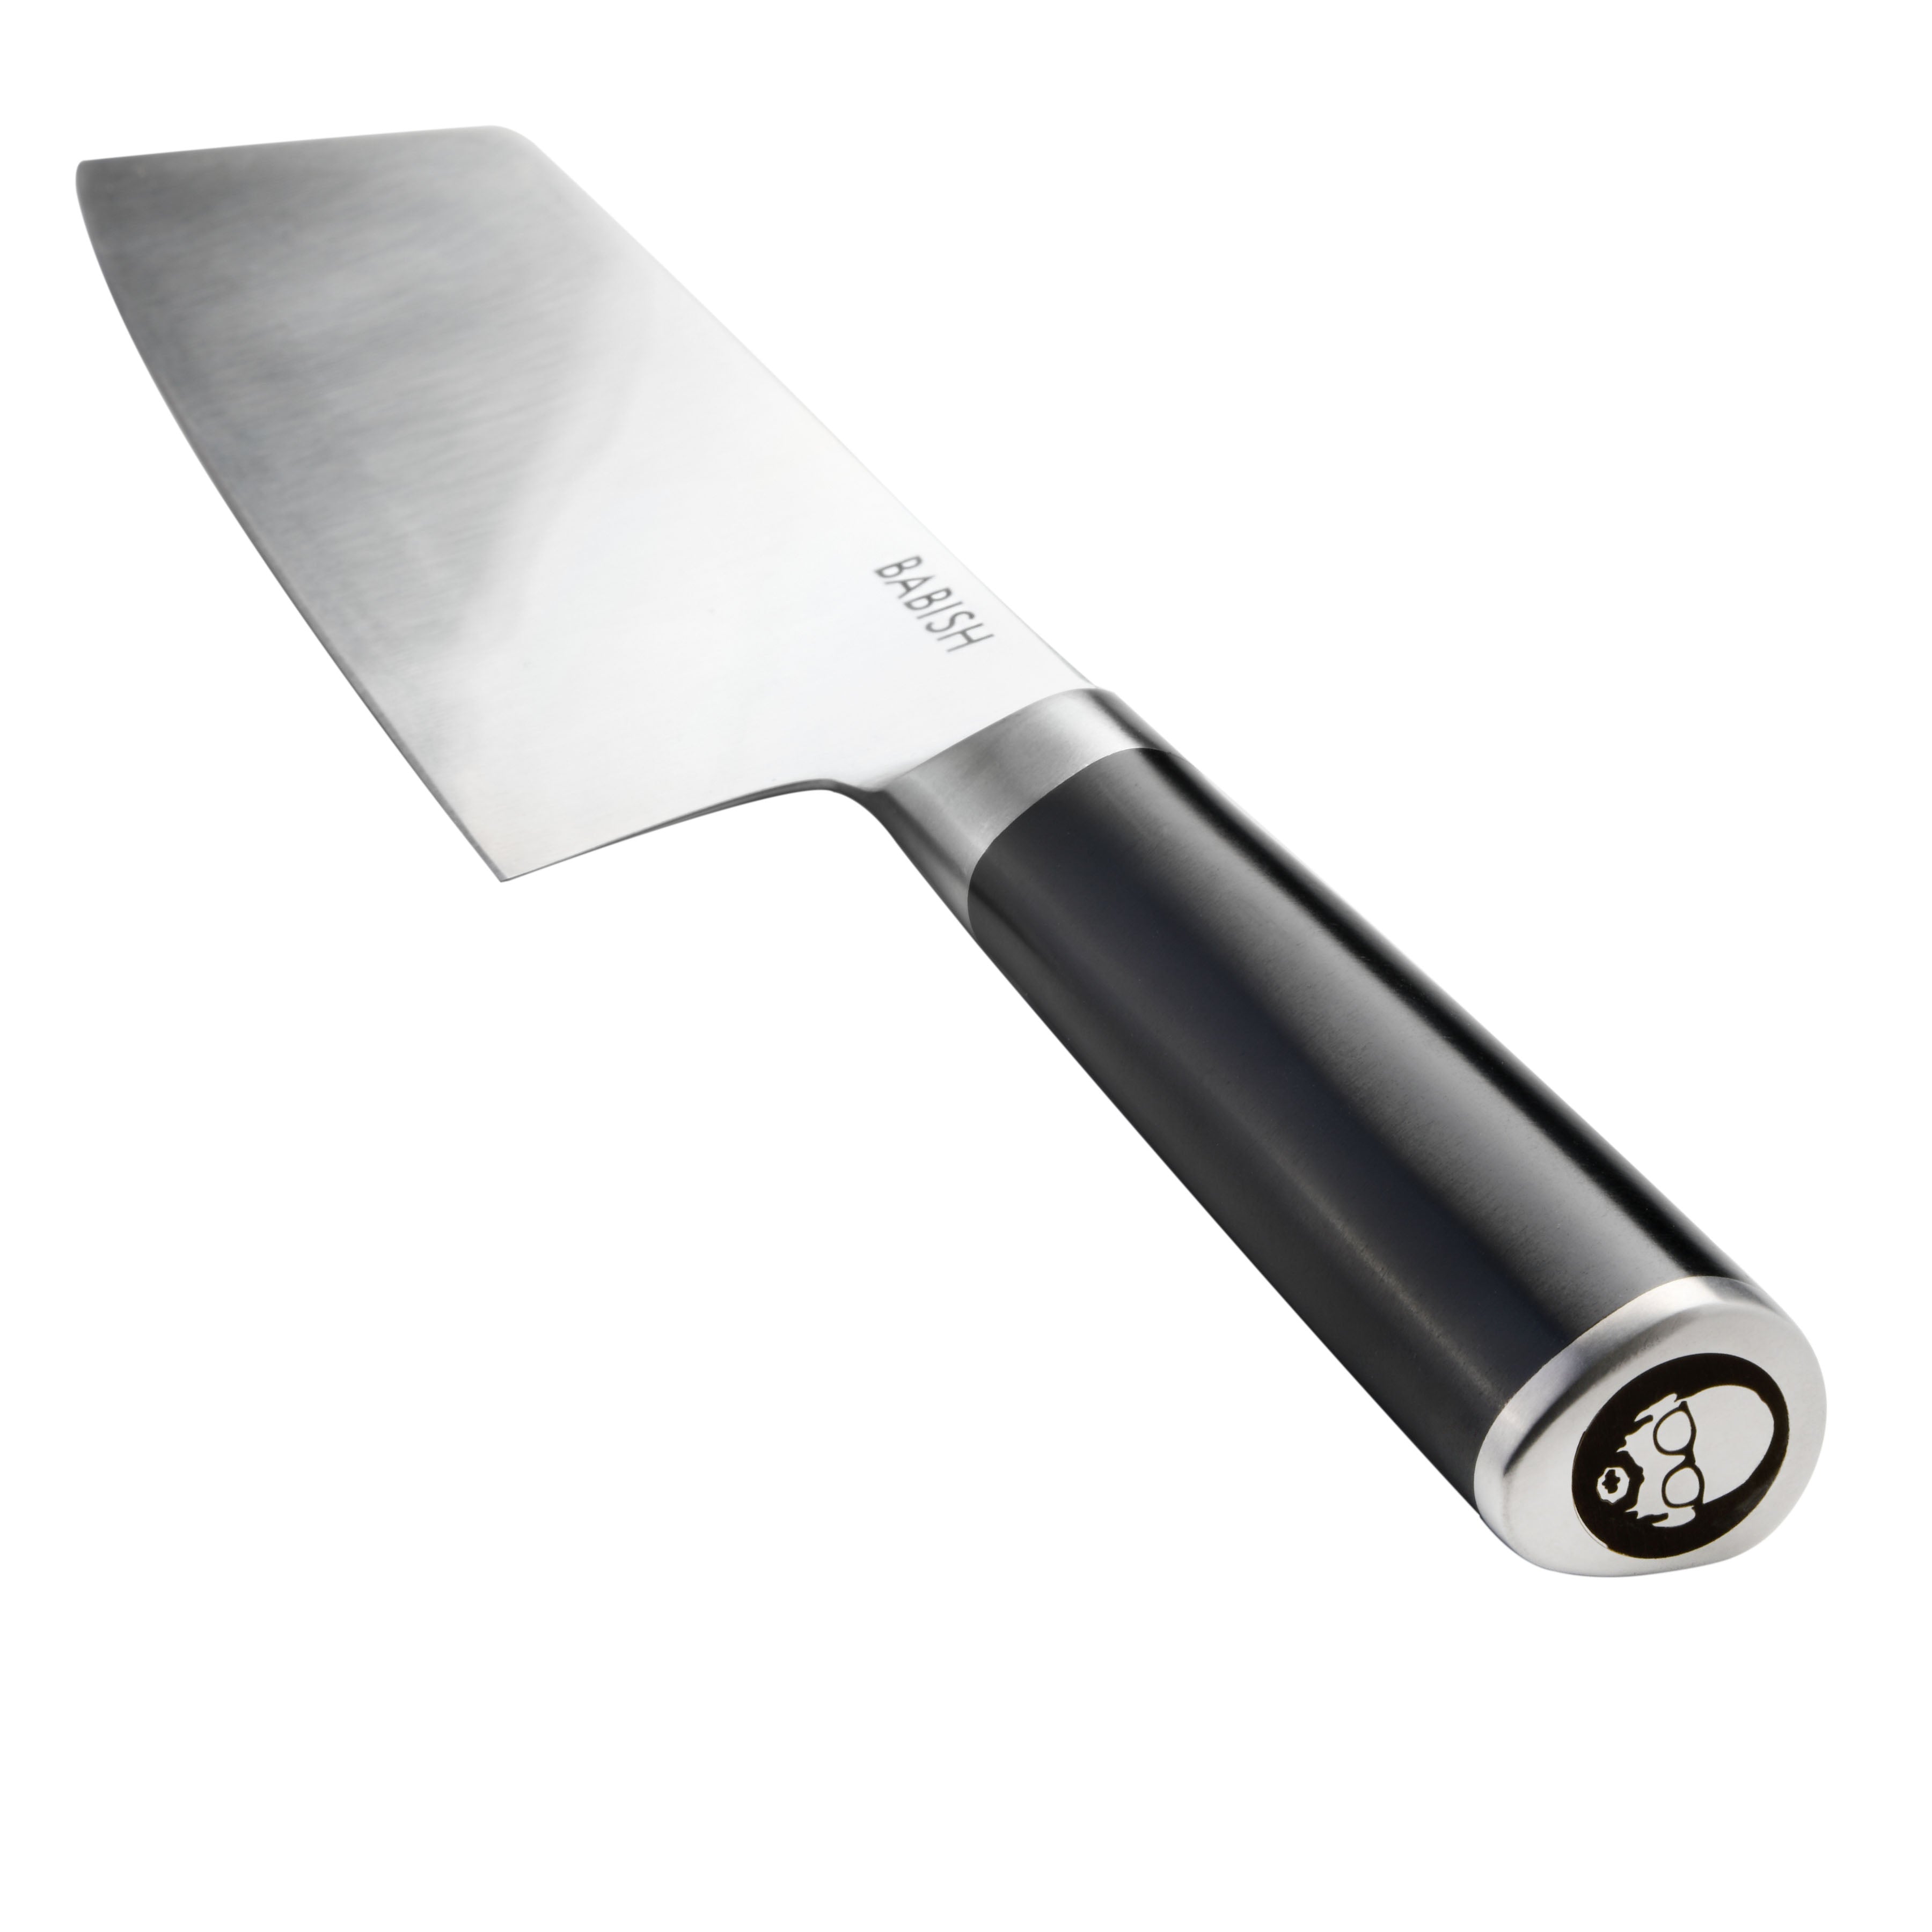 Brand New! Babish High-Carbon 1.4116 German Steel Cutlery 7.5 Clef Knife